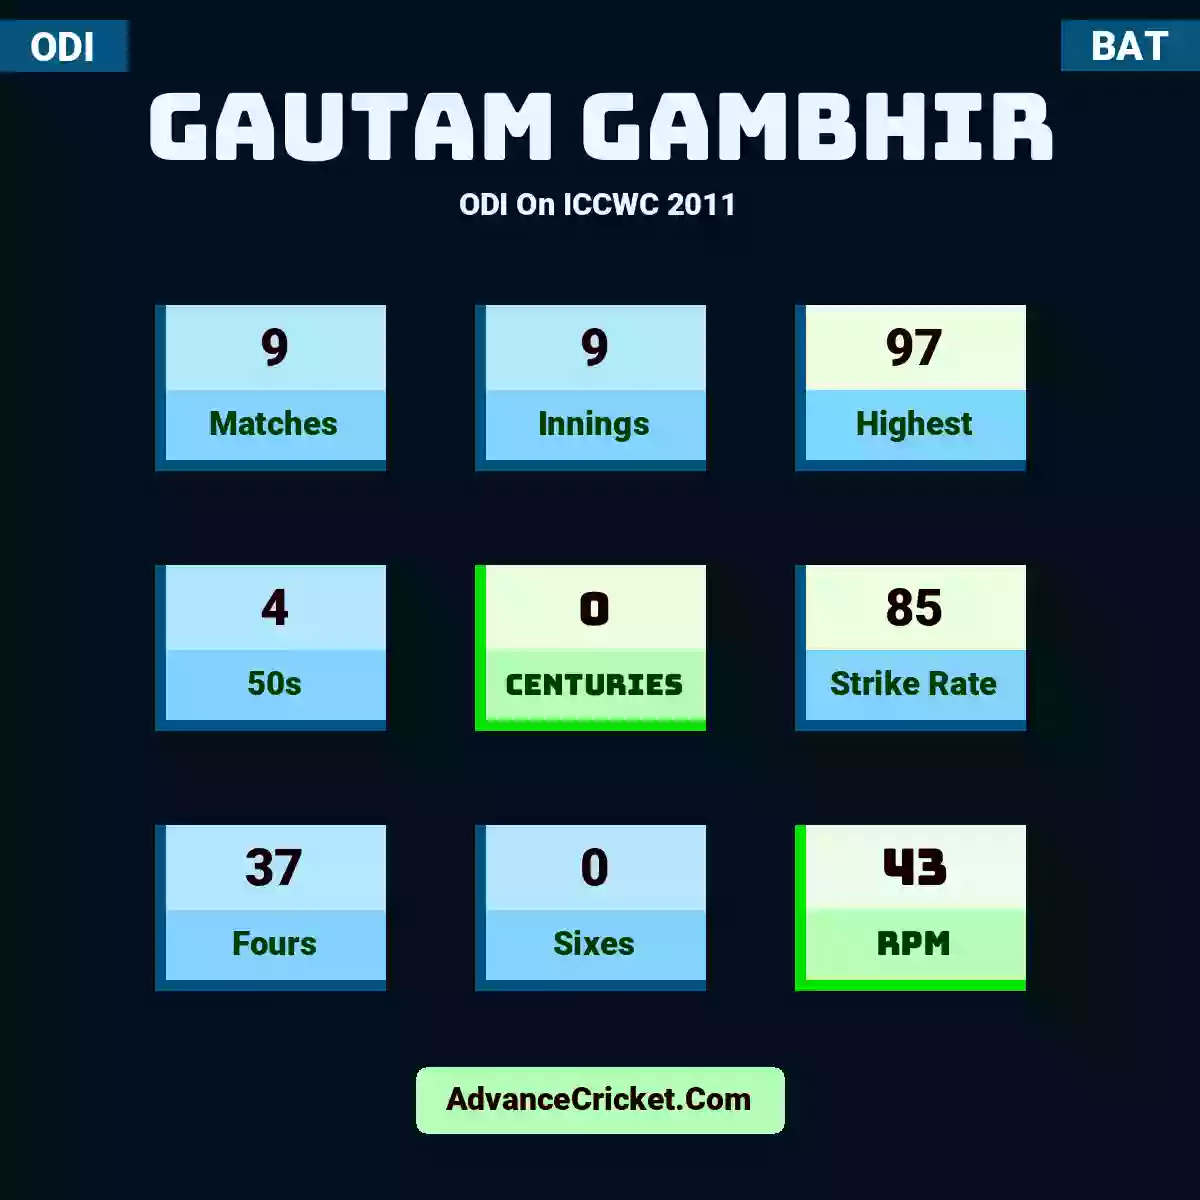 Gautam Gambhir ODI  On ICCWC 2011, Gautam Gambhir played 9 matches, scored 97 runs as highest, 4 half-centuries, and 0 centuries, with a strike rate of 85. G.Gambhir hit 37 fours and 0 sixes, with an RPM of 43.